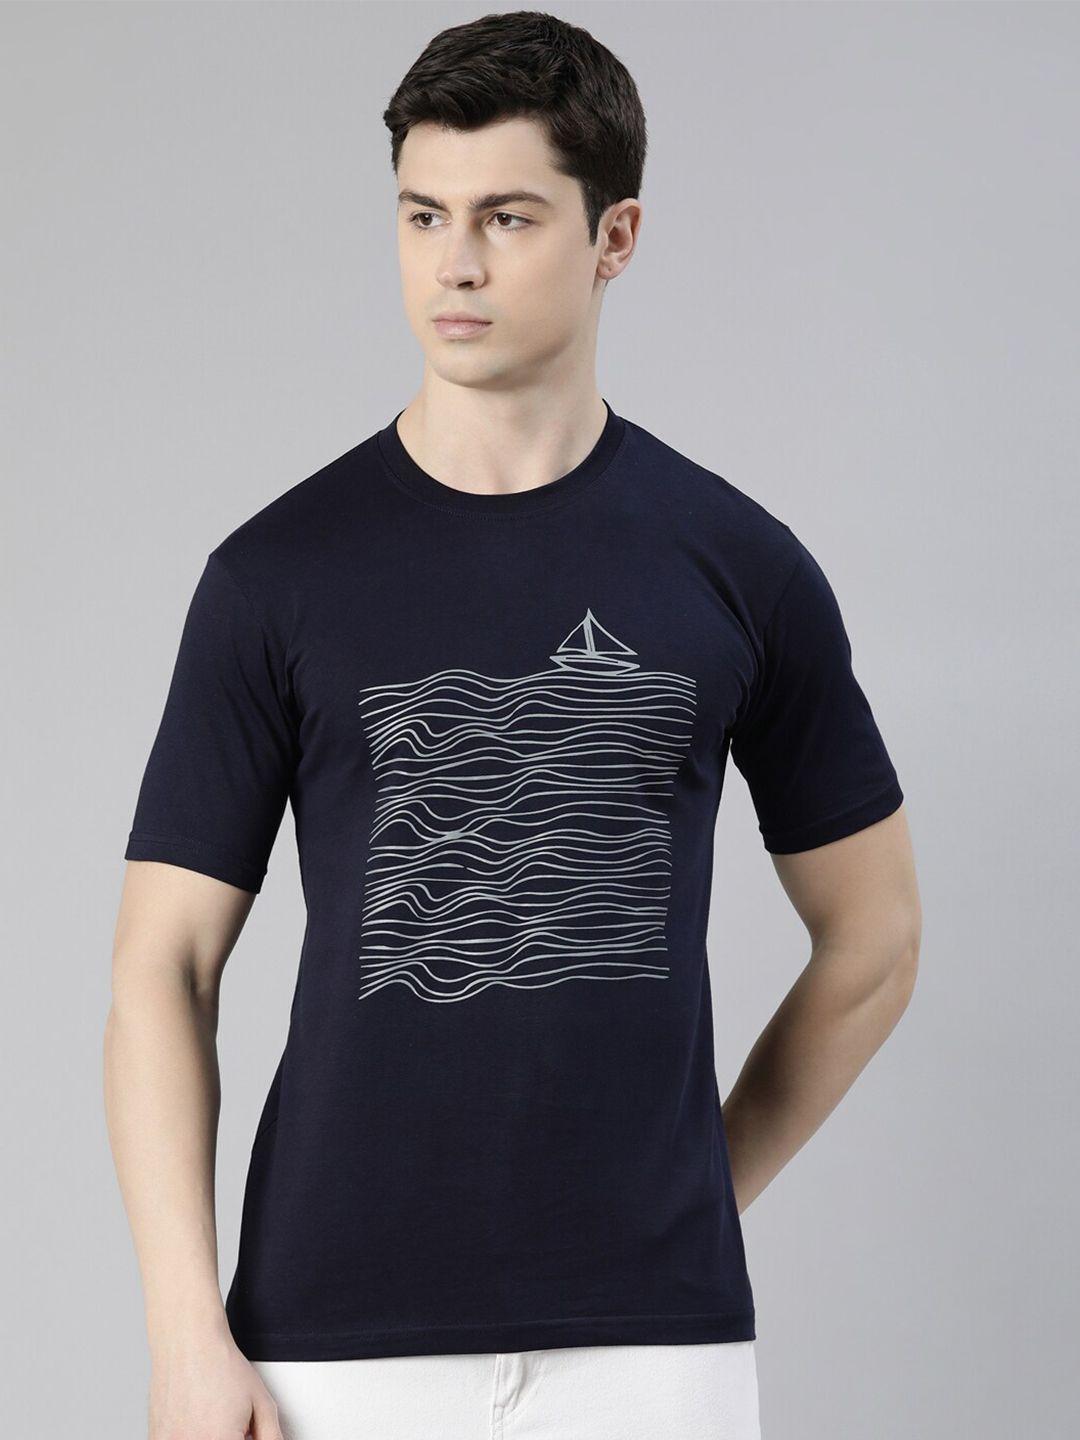 recast bio finish nautical printed pure cotton t-shirt